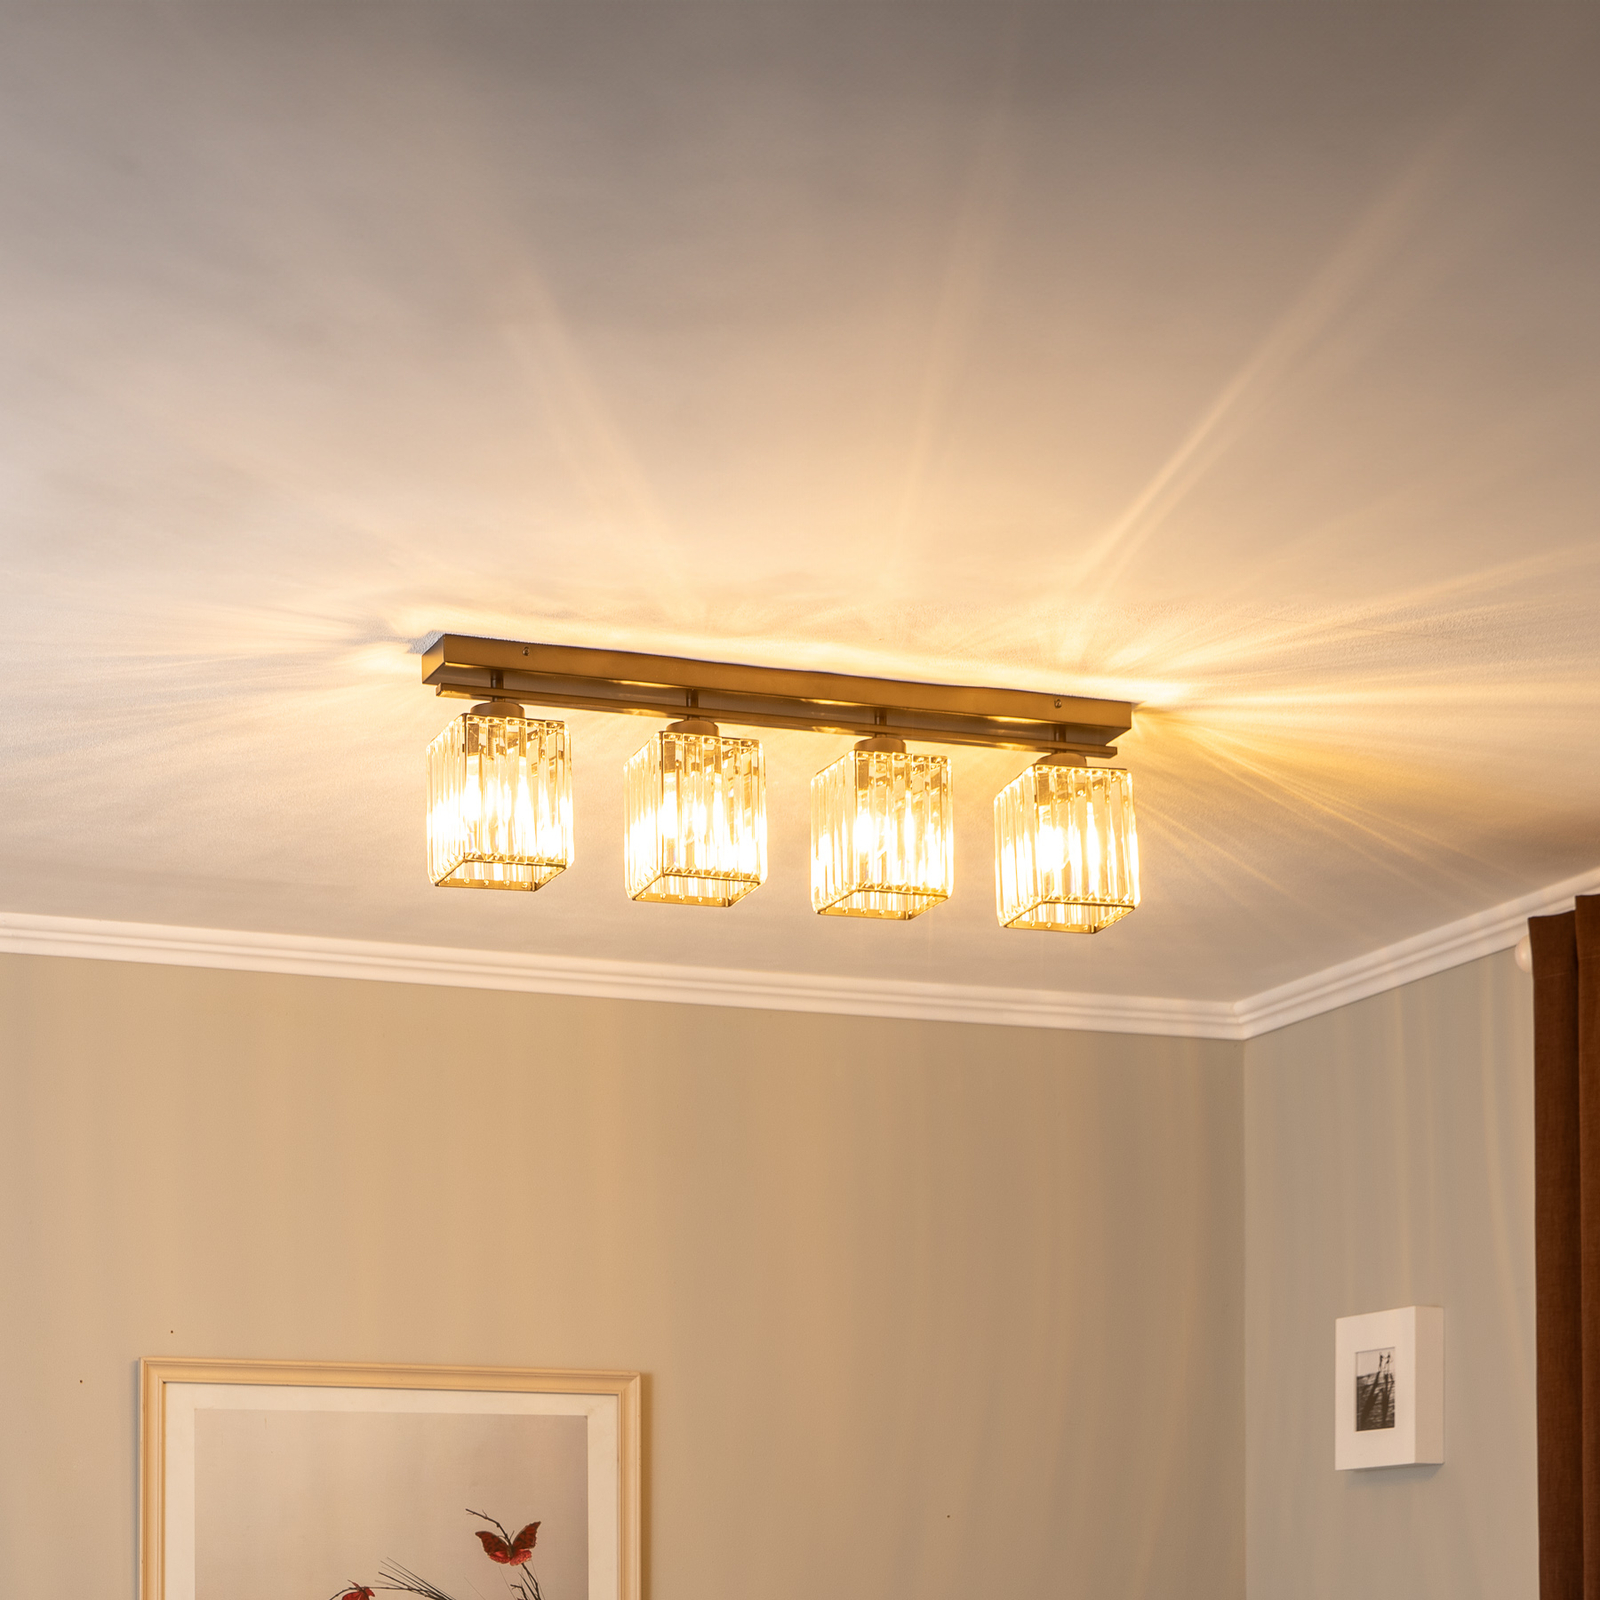 AV-1795-4Y-BSY ceiling light 4-bulb, linear, black